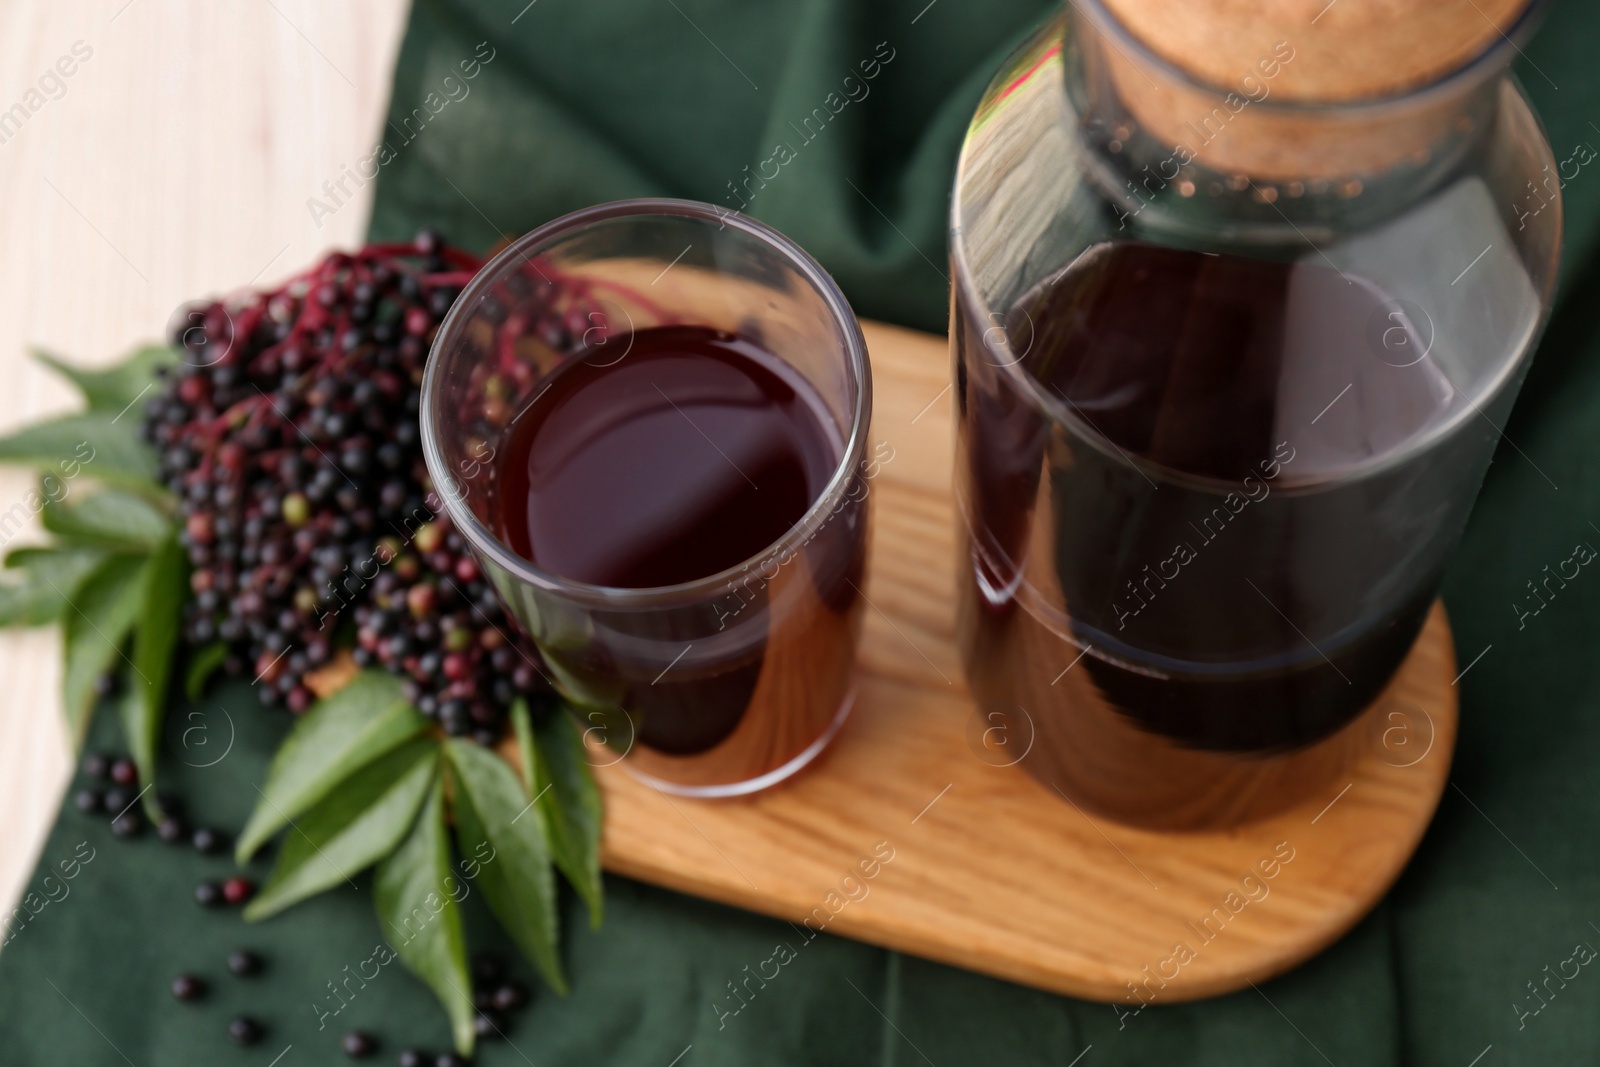 Photo of Elderberry drink and Sambucus berries on table, closeup